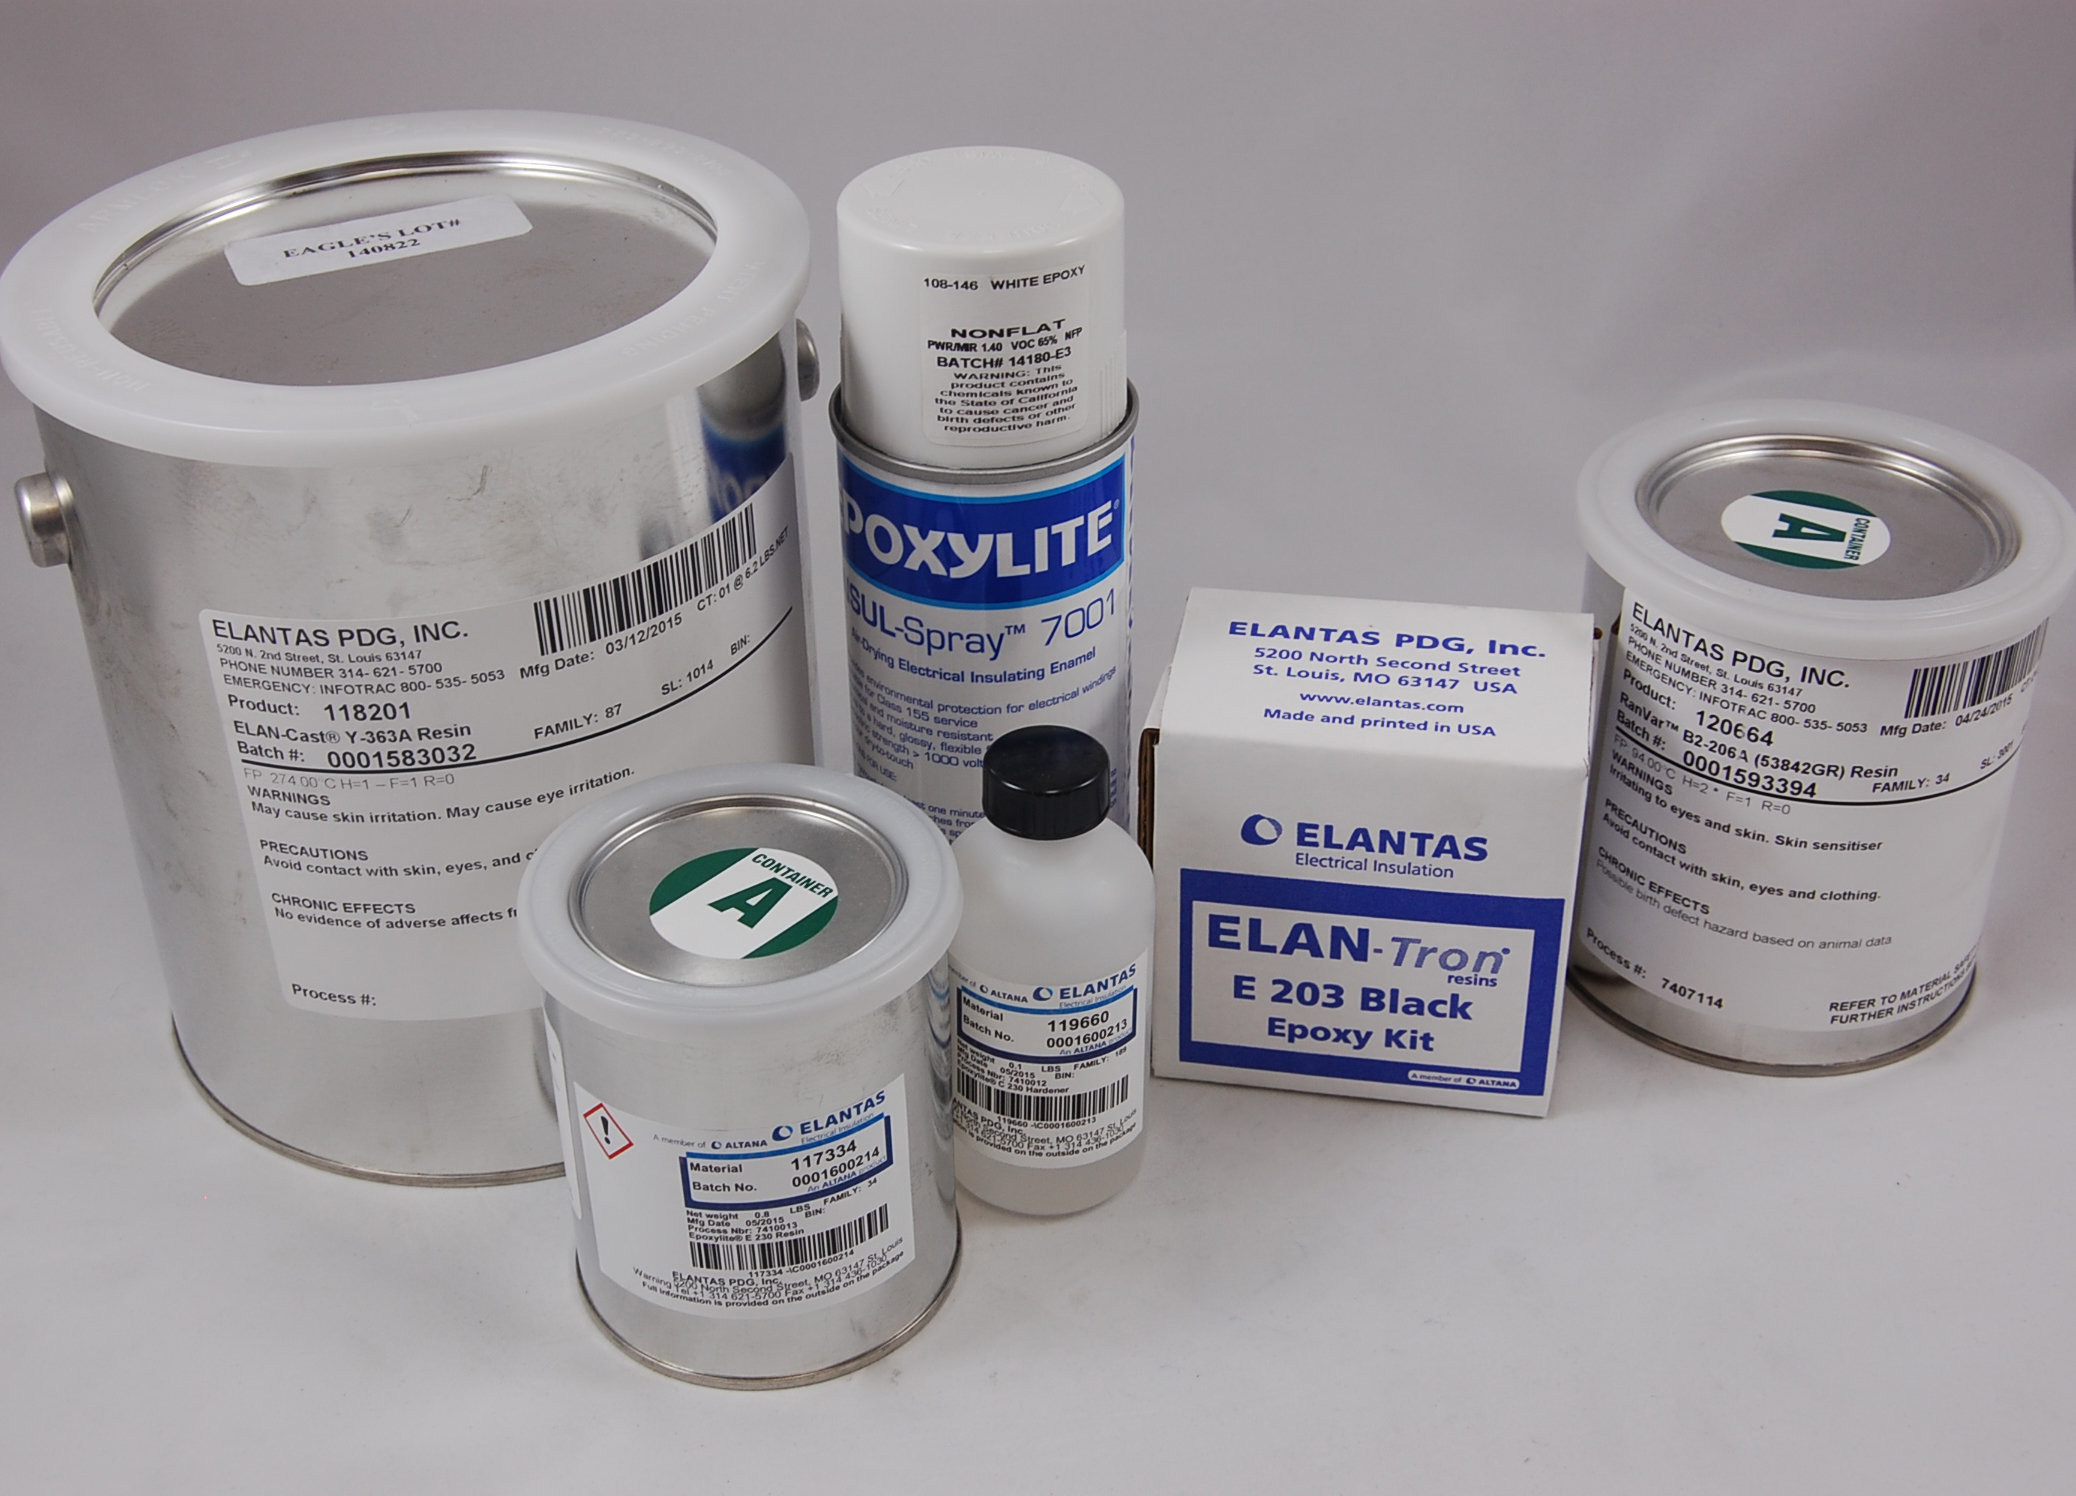 ELAN-Guard EM 59-50MR Waterborne Hermetic Epoxy Impregnating Resin 200°C, opaque white, 5 GALLON pail (44 lb)